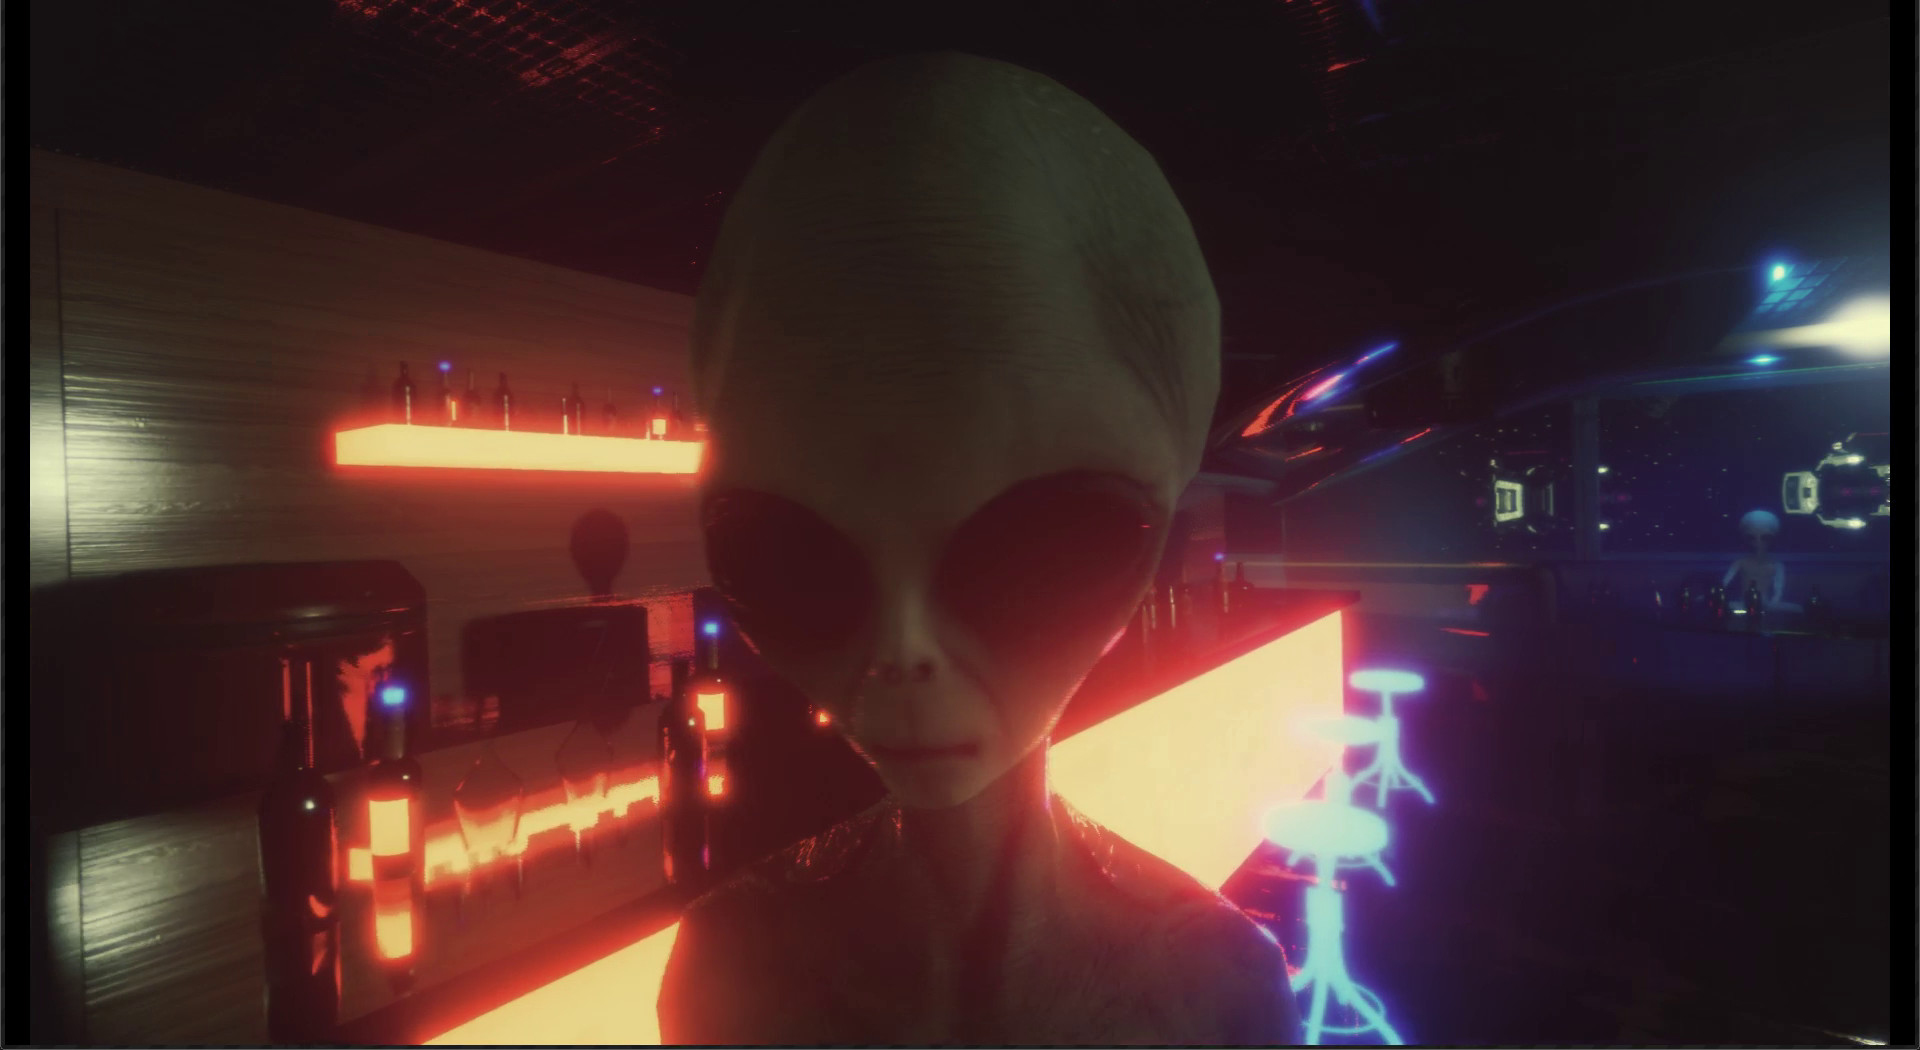 alien-simulator-on-steam